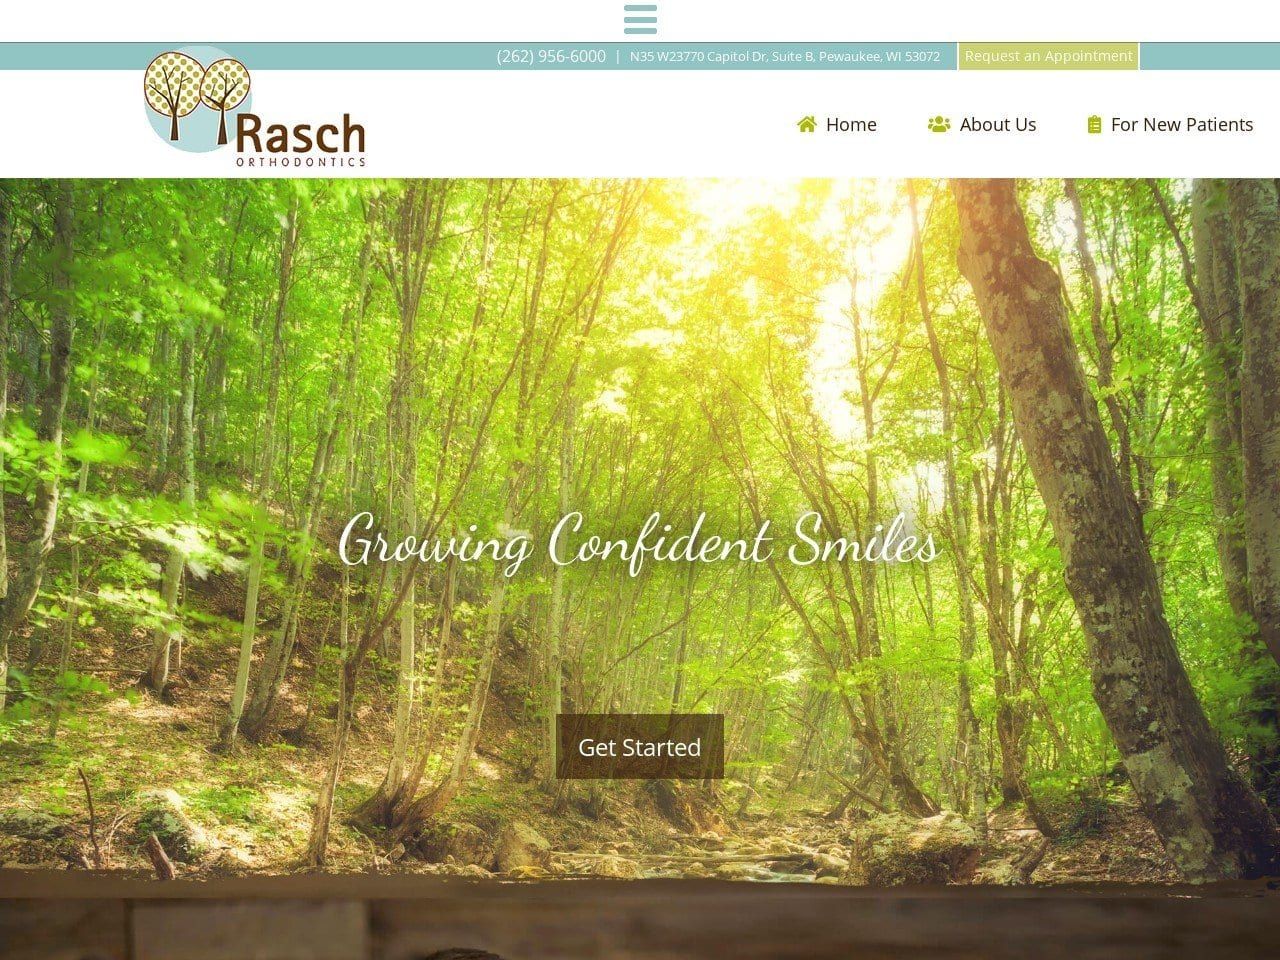 Rasch Orthodontics Website Screenshot from raschortho.com